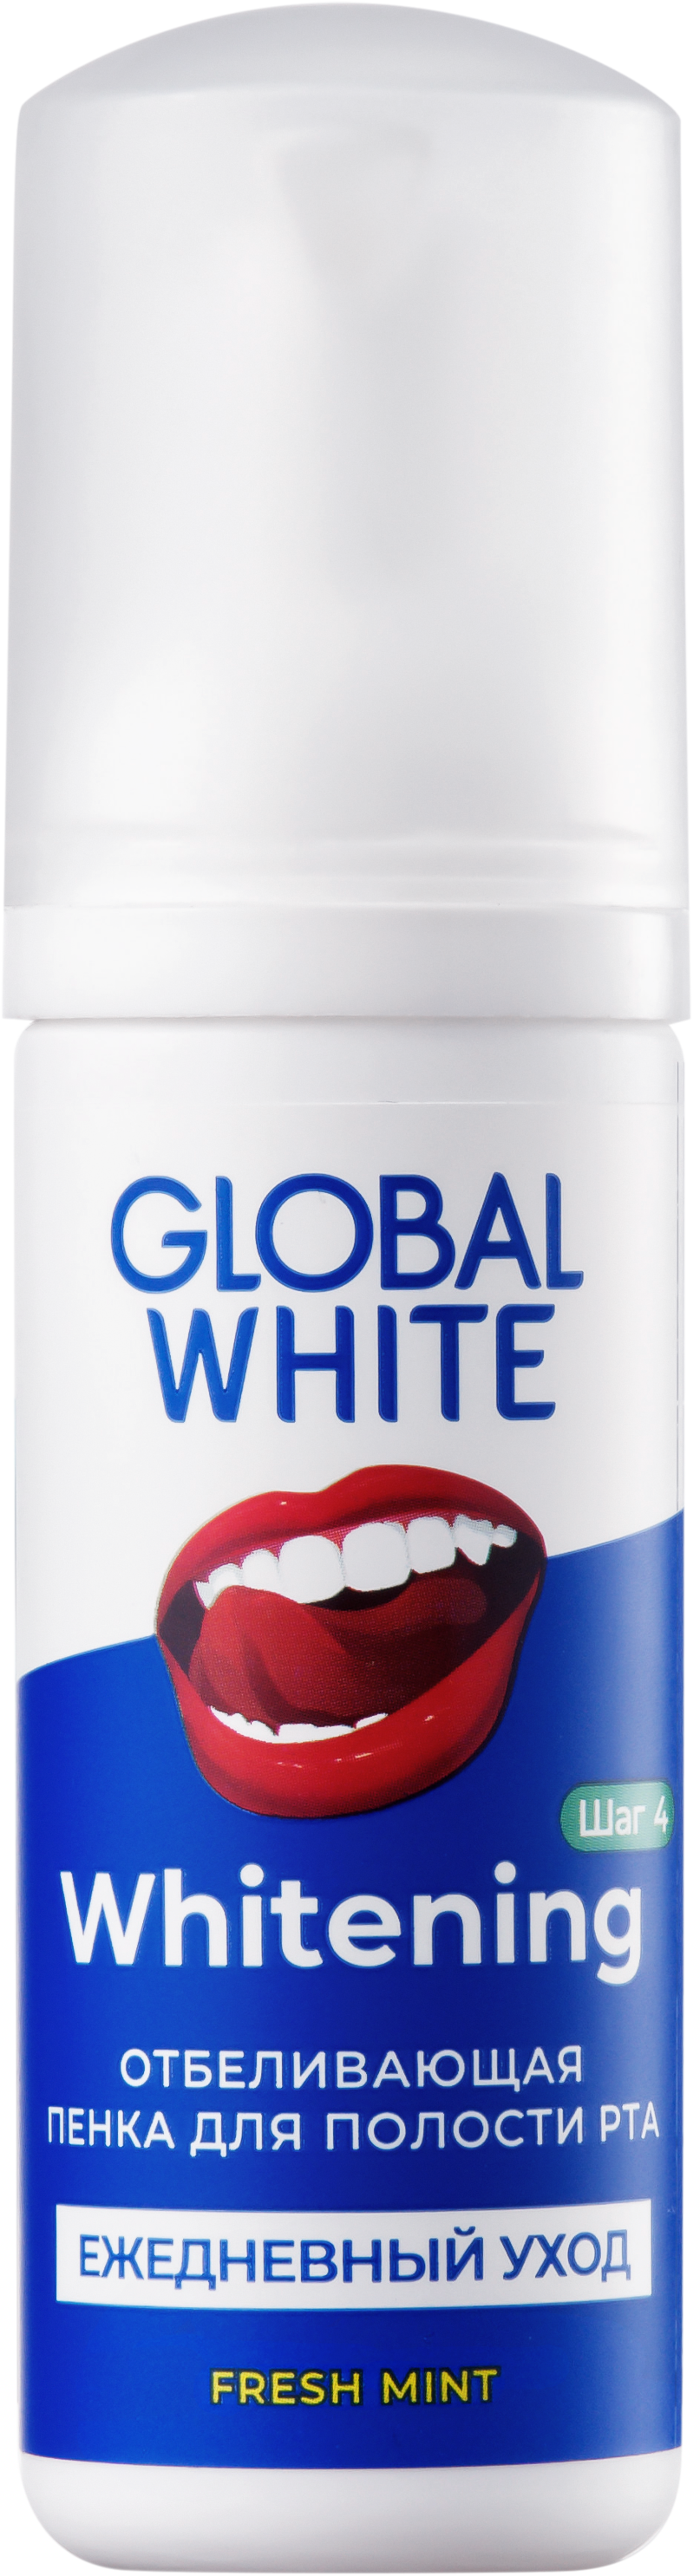 фото упаковки Global White пенка для полости рта отбеливающая